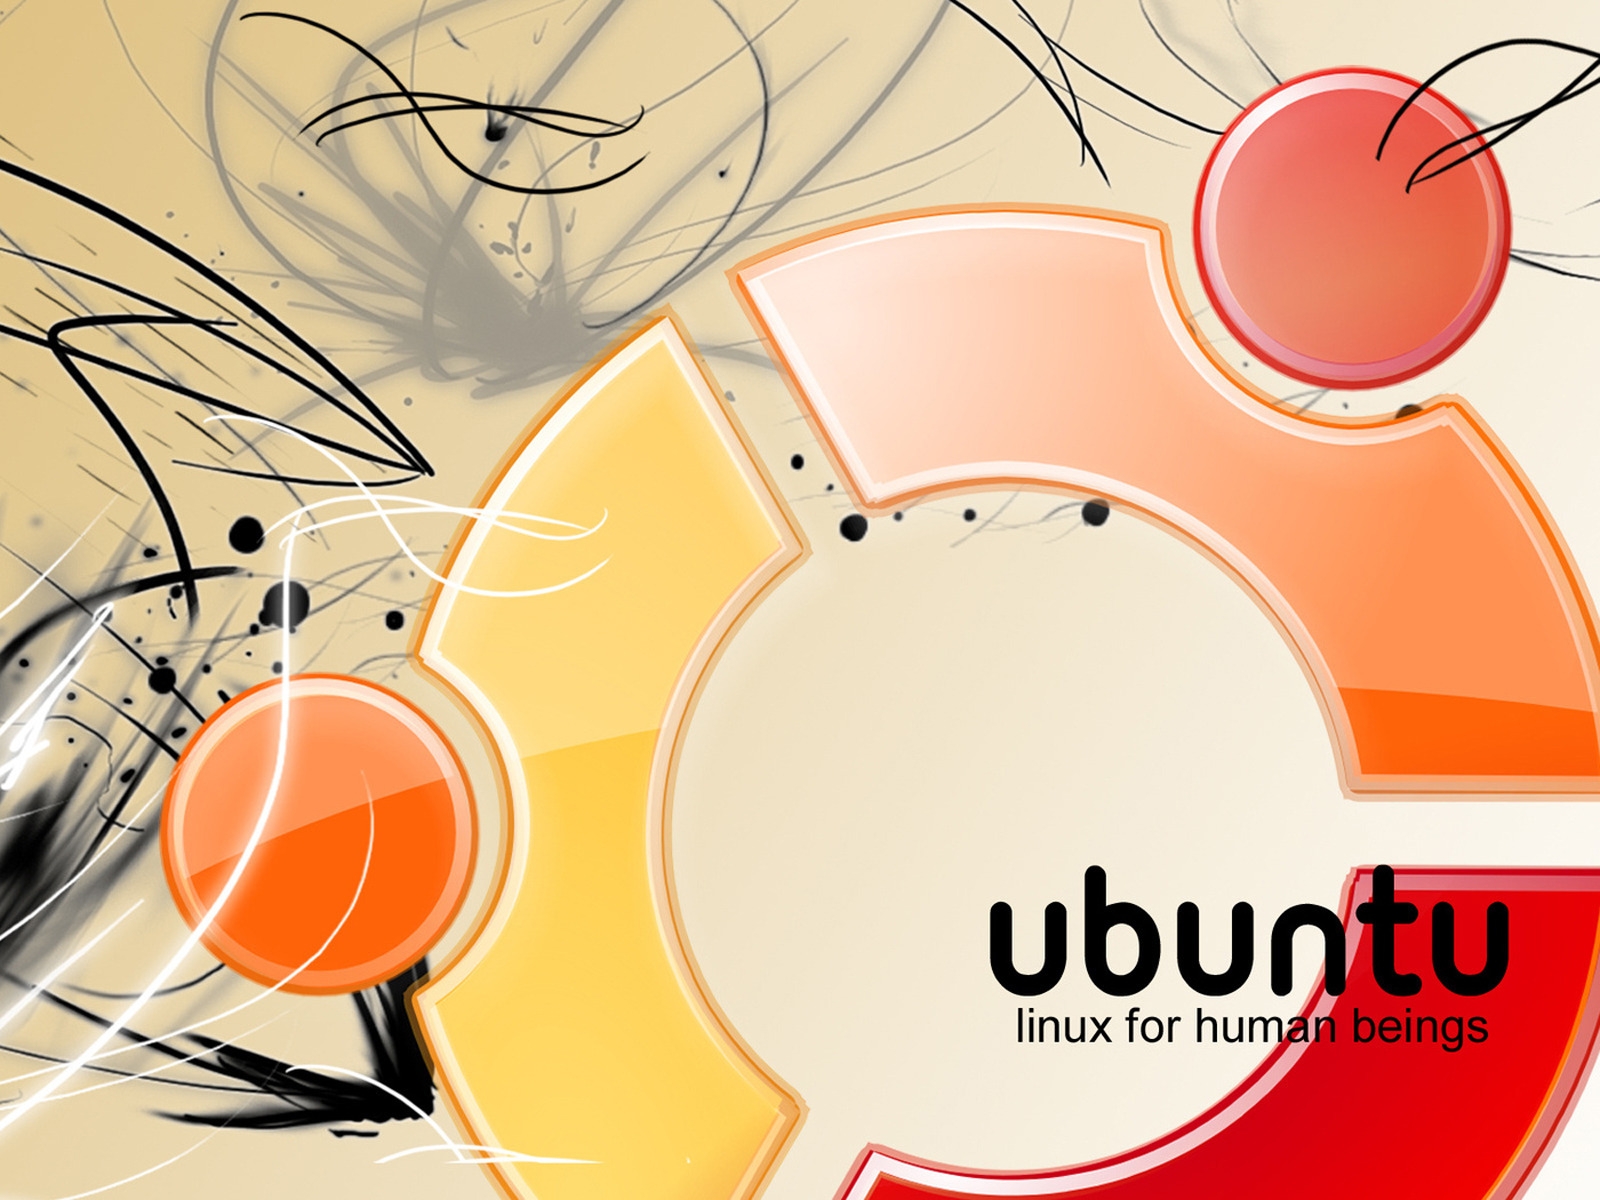 Ubuntu Linux for 1600 x 1200 resolution